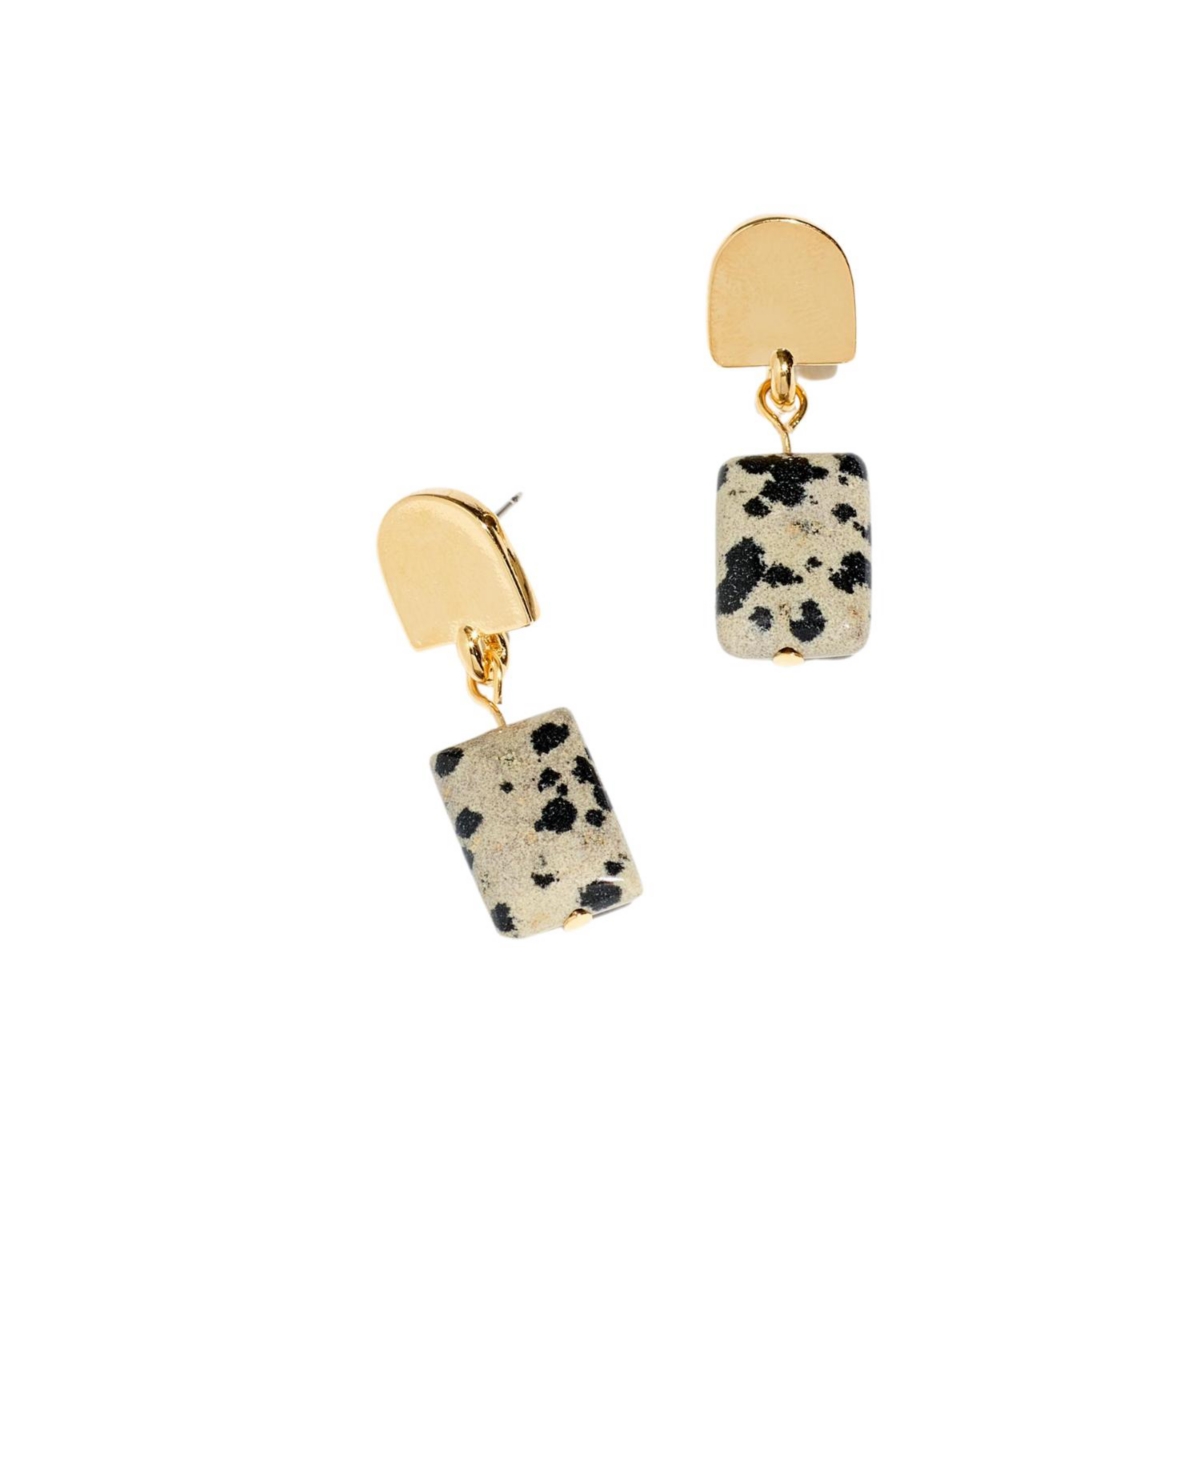 Dome + Dalmatian Jasper Earrings - Beige/khaki